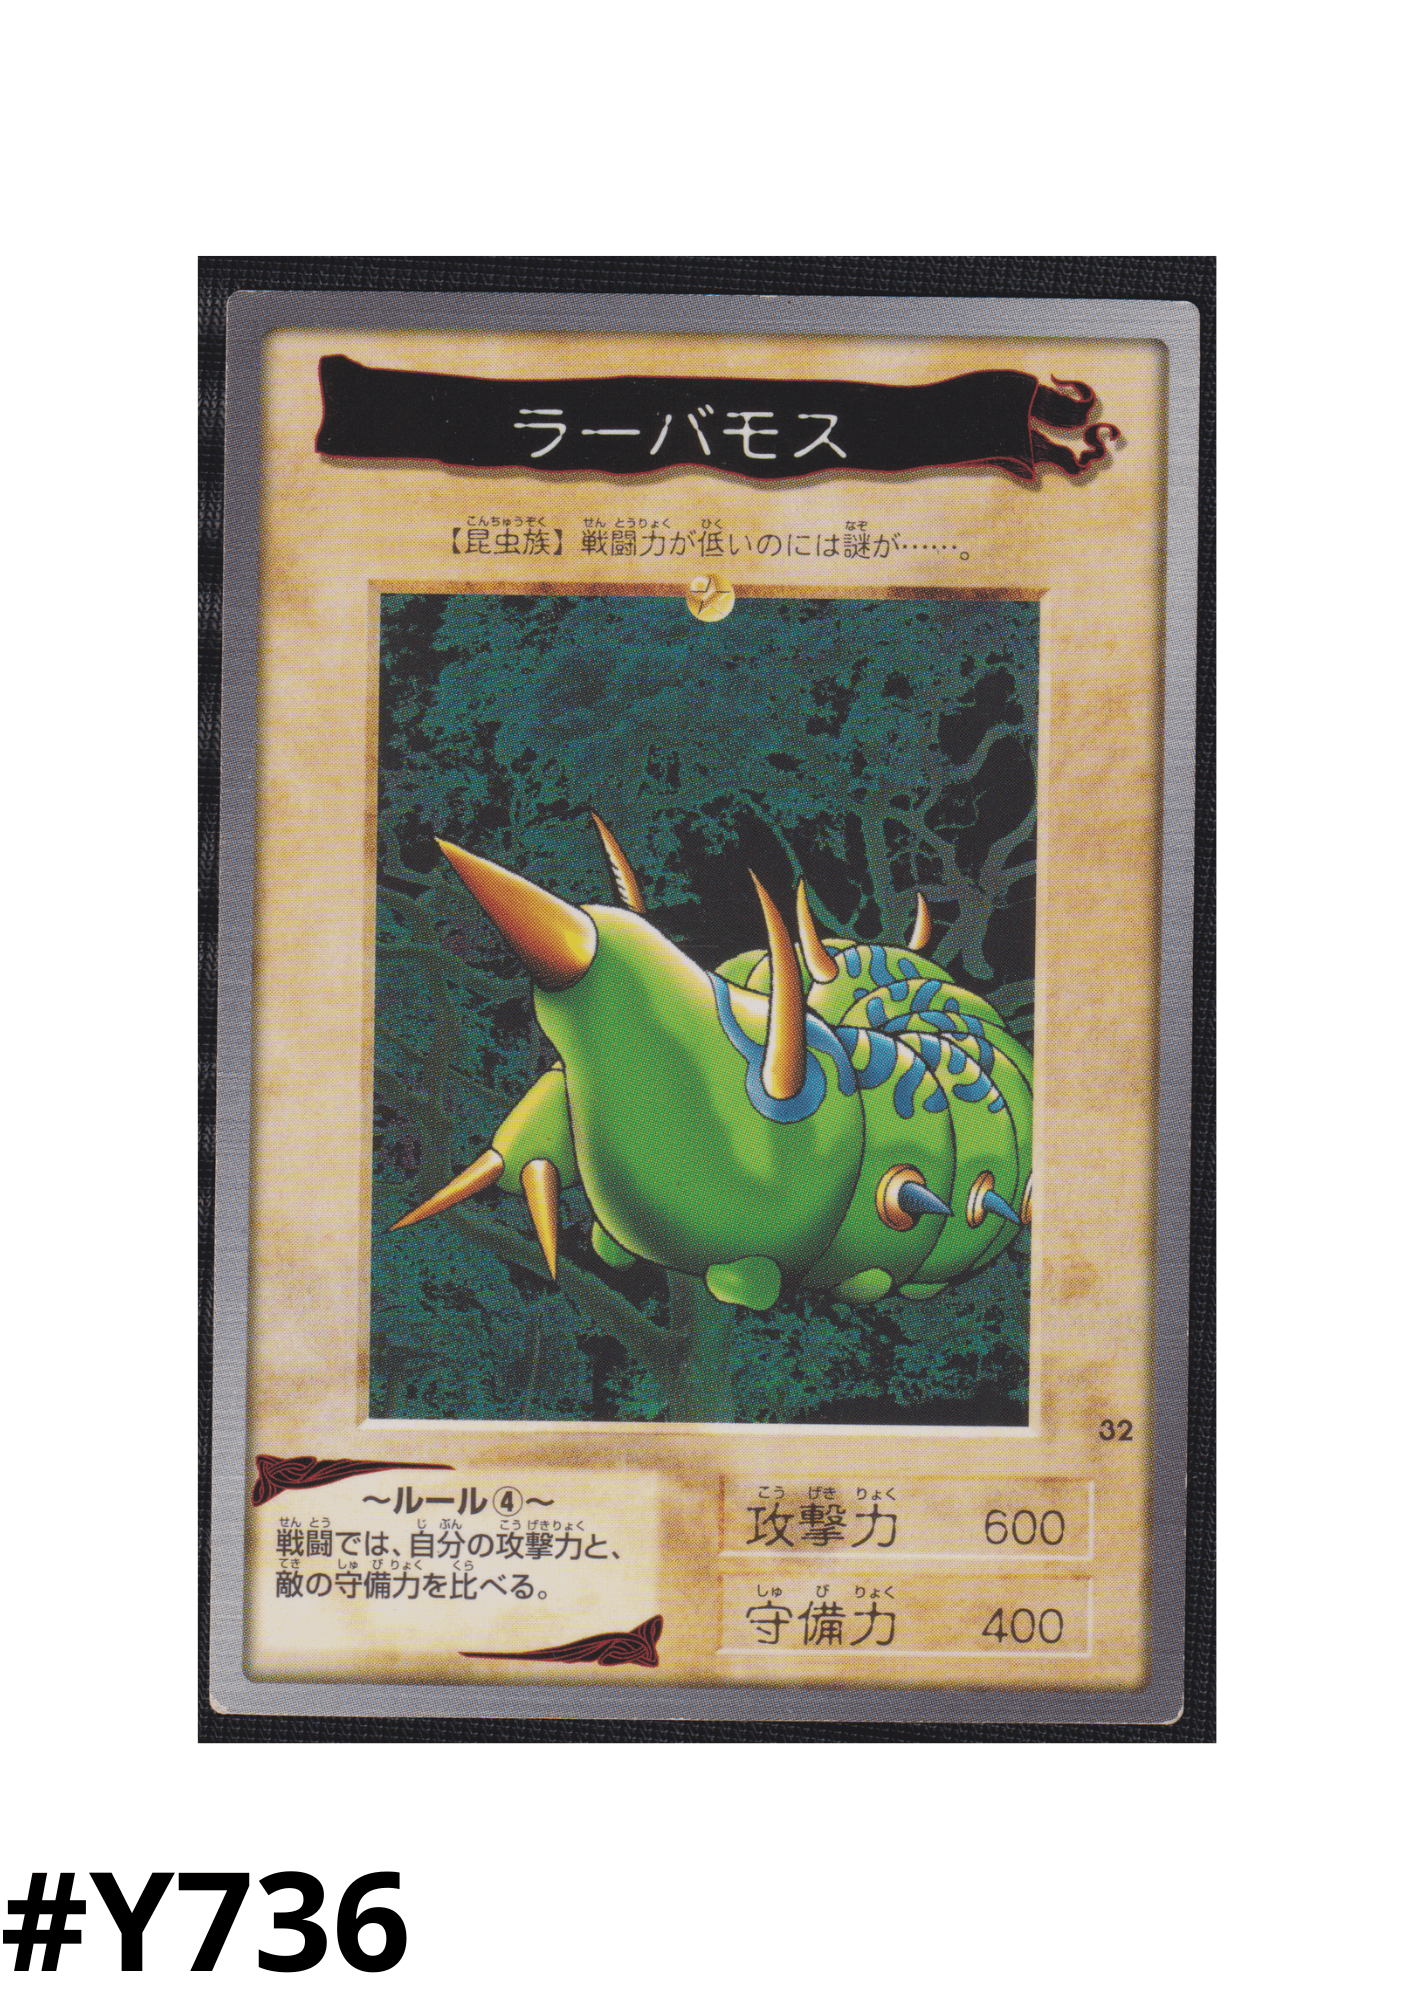 Yu Gi Oh! | Bandai Card No.32 | Larvae Moth ChitoroShop